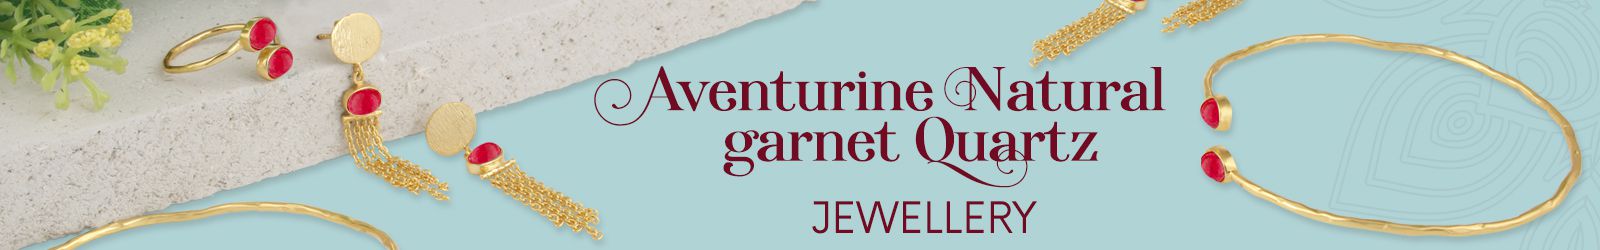 Silver Aveturine Natural Garnet Quartz Jewelry Wholesale Supplier